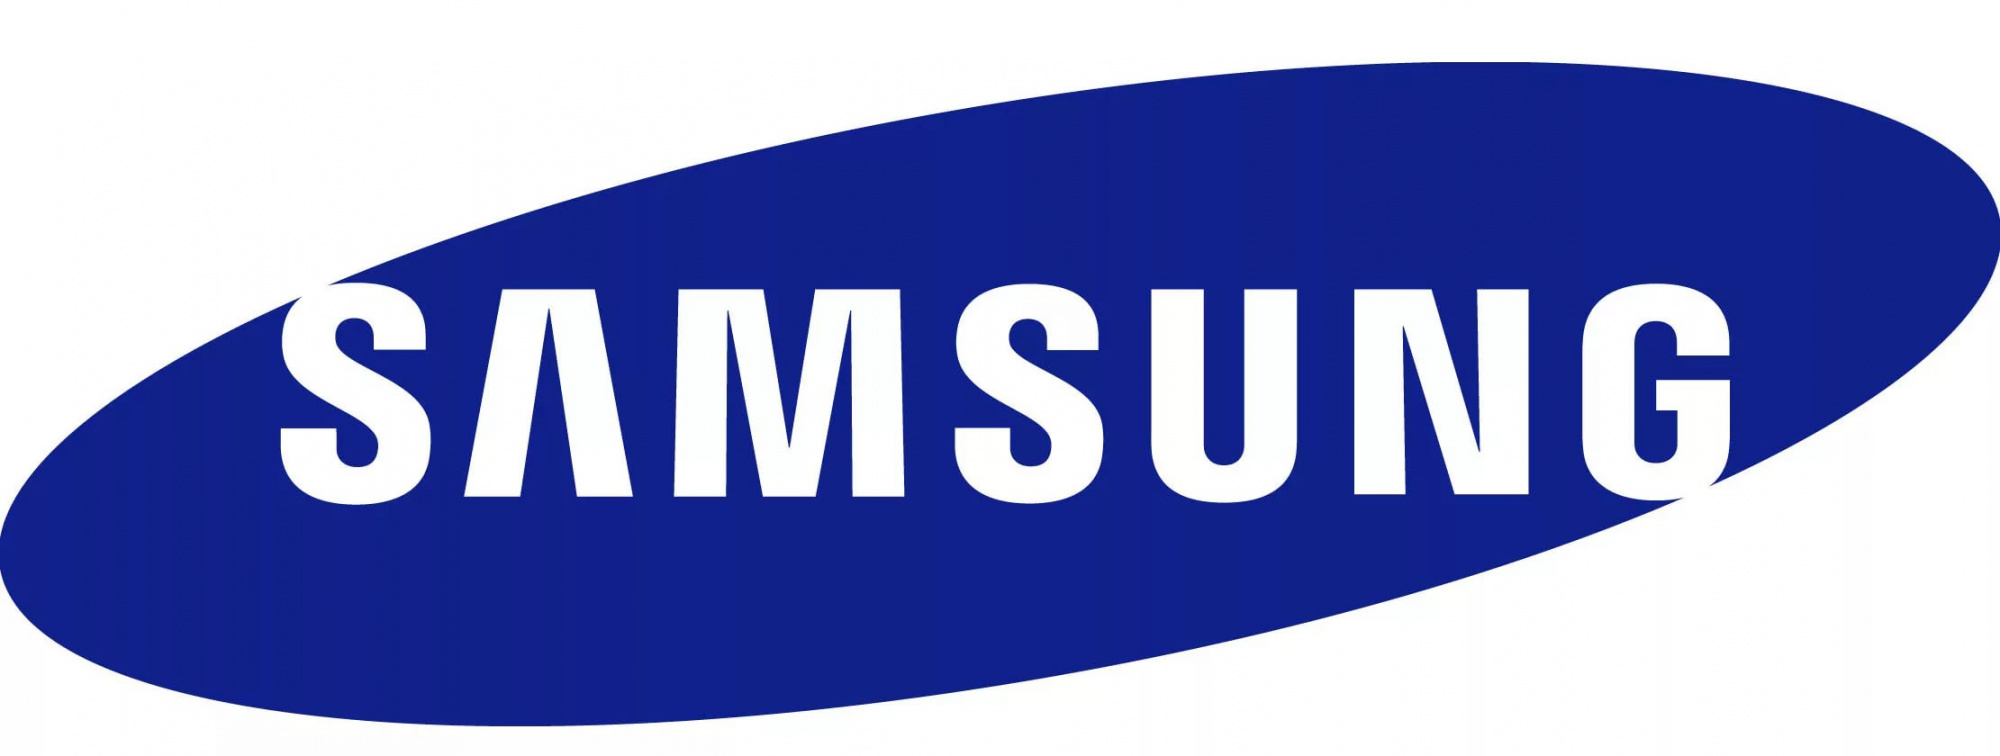 SAMSUNG логотип